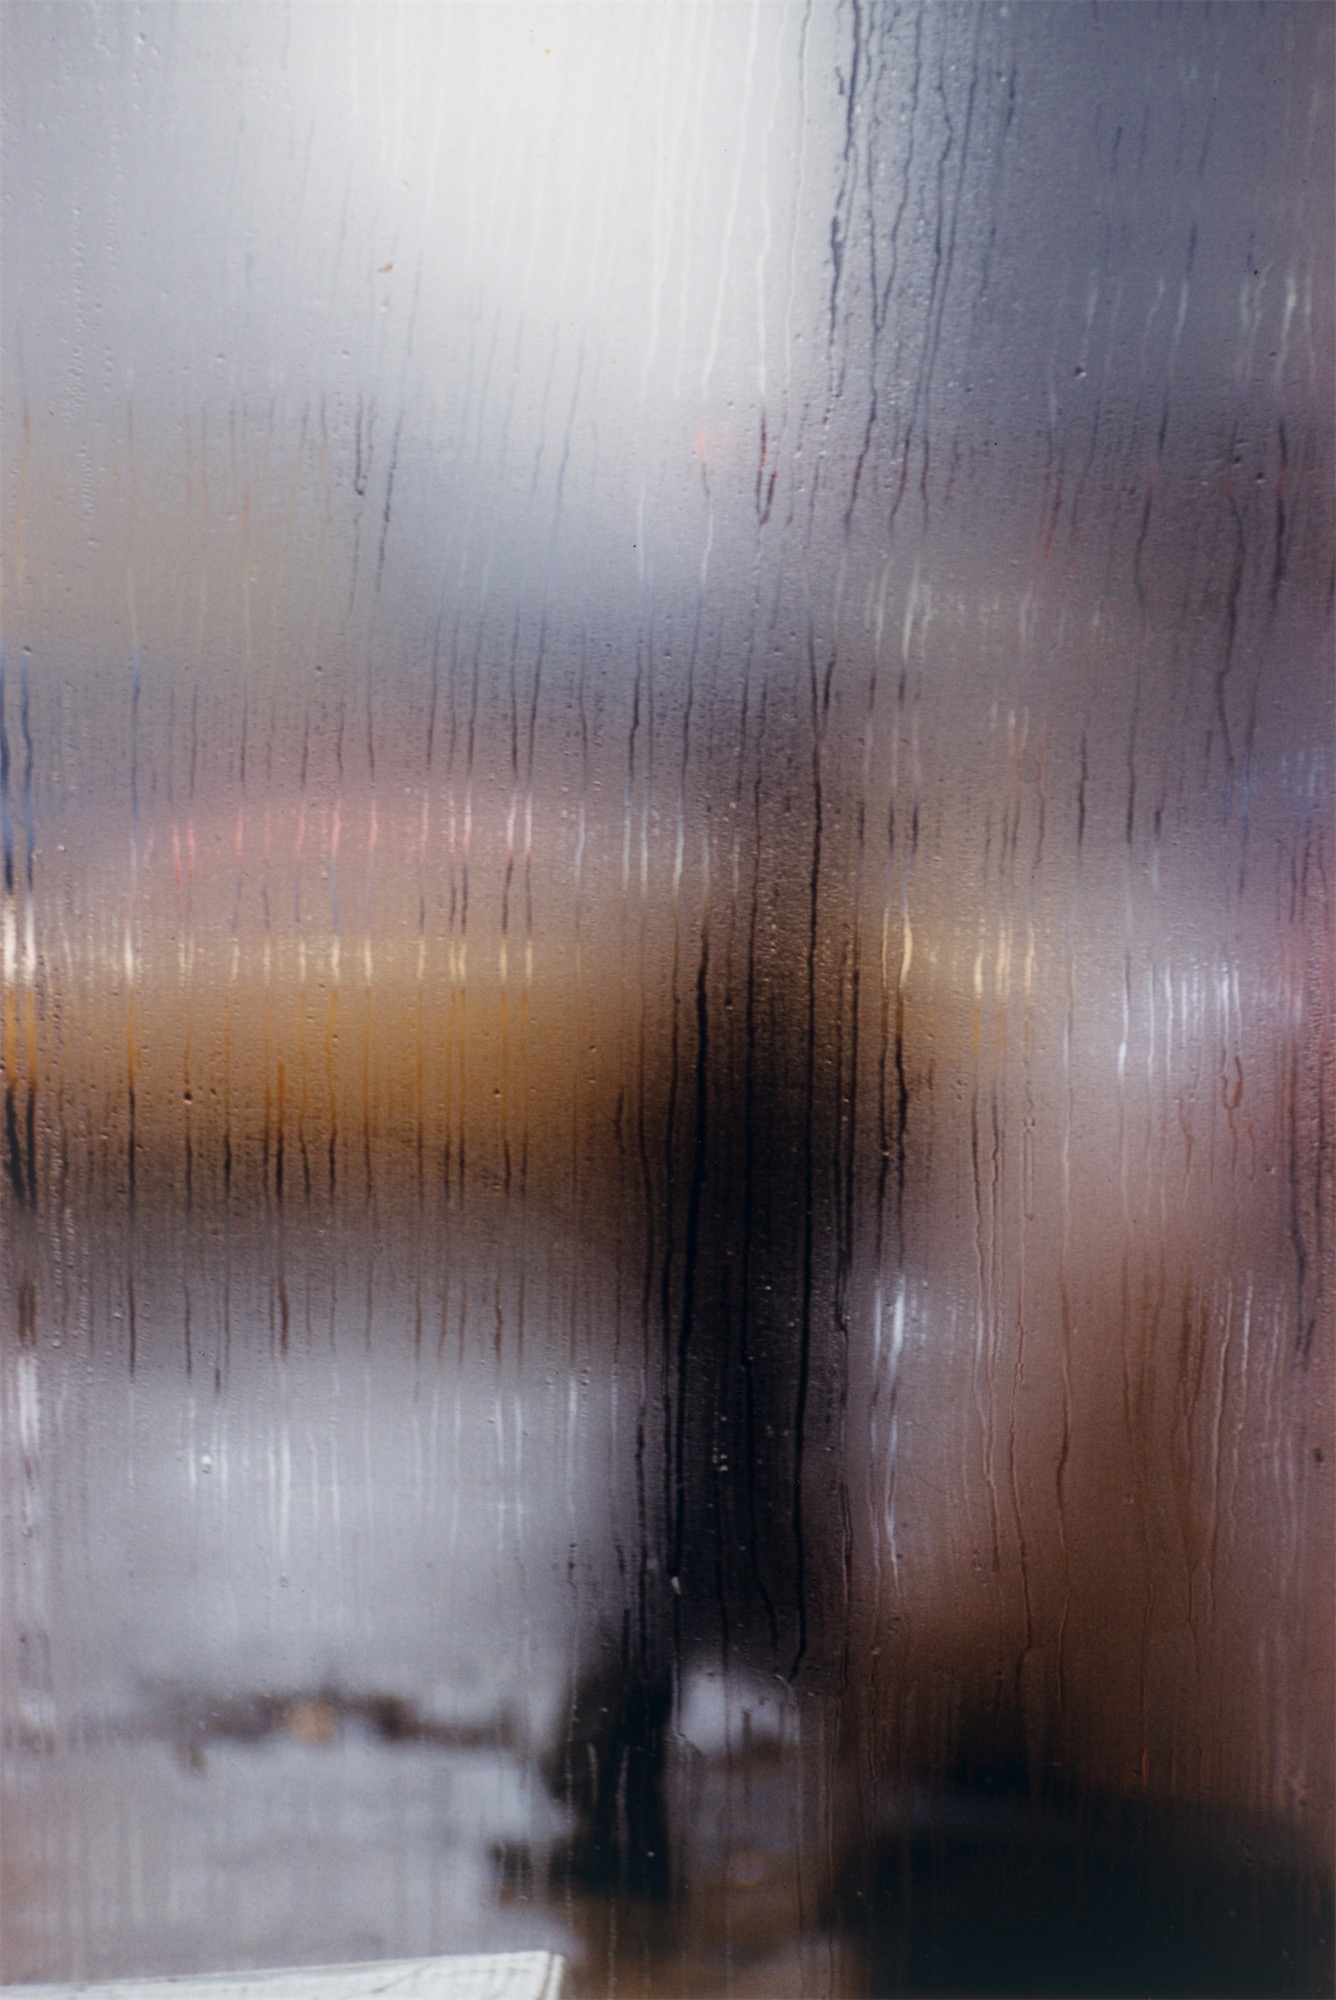 Saul Leiter. Wet Window. 1960